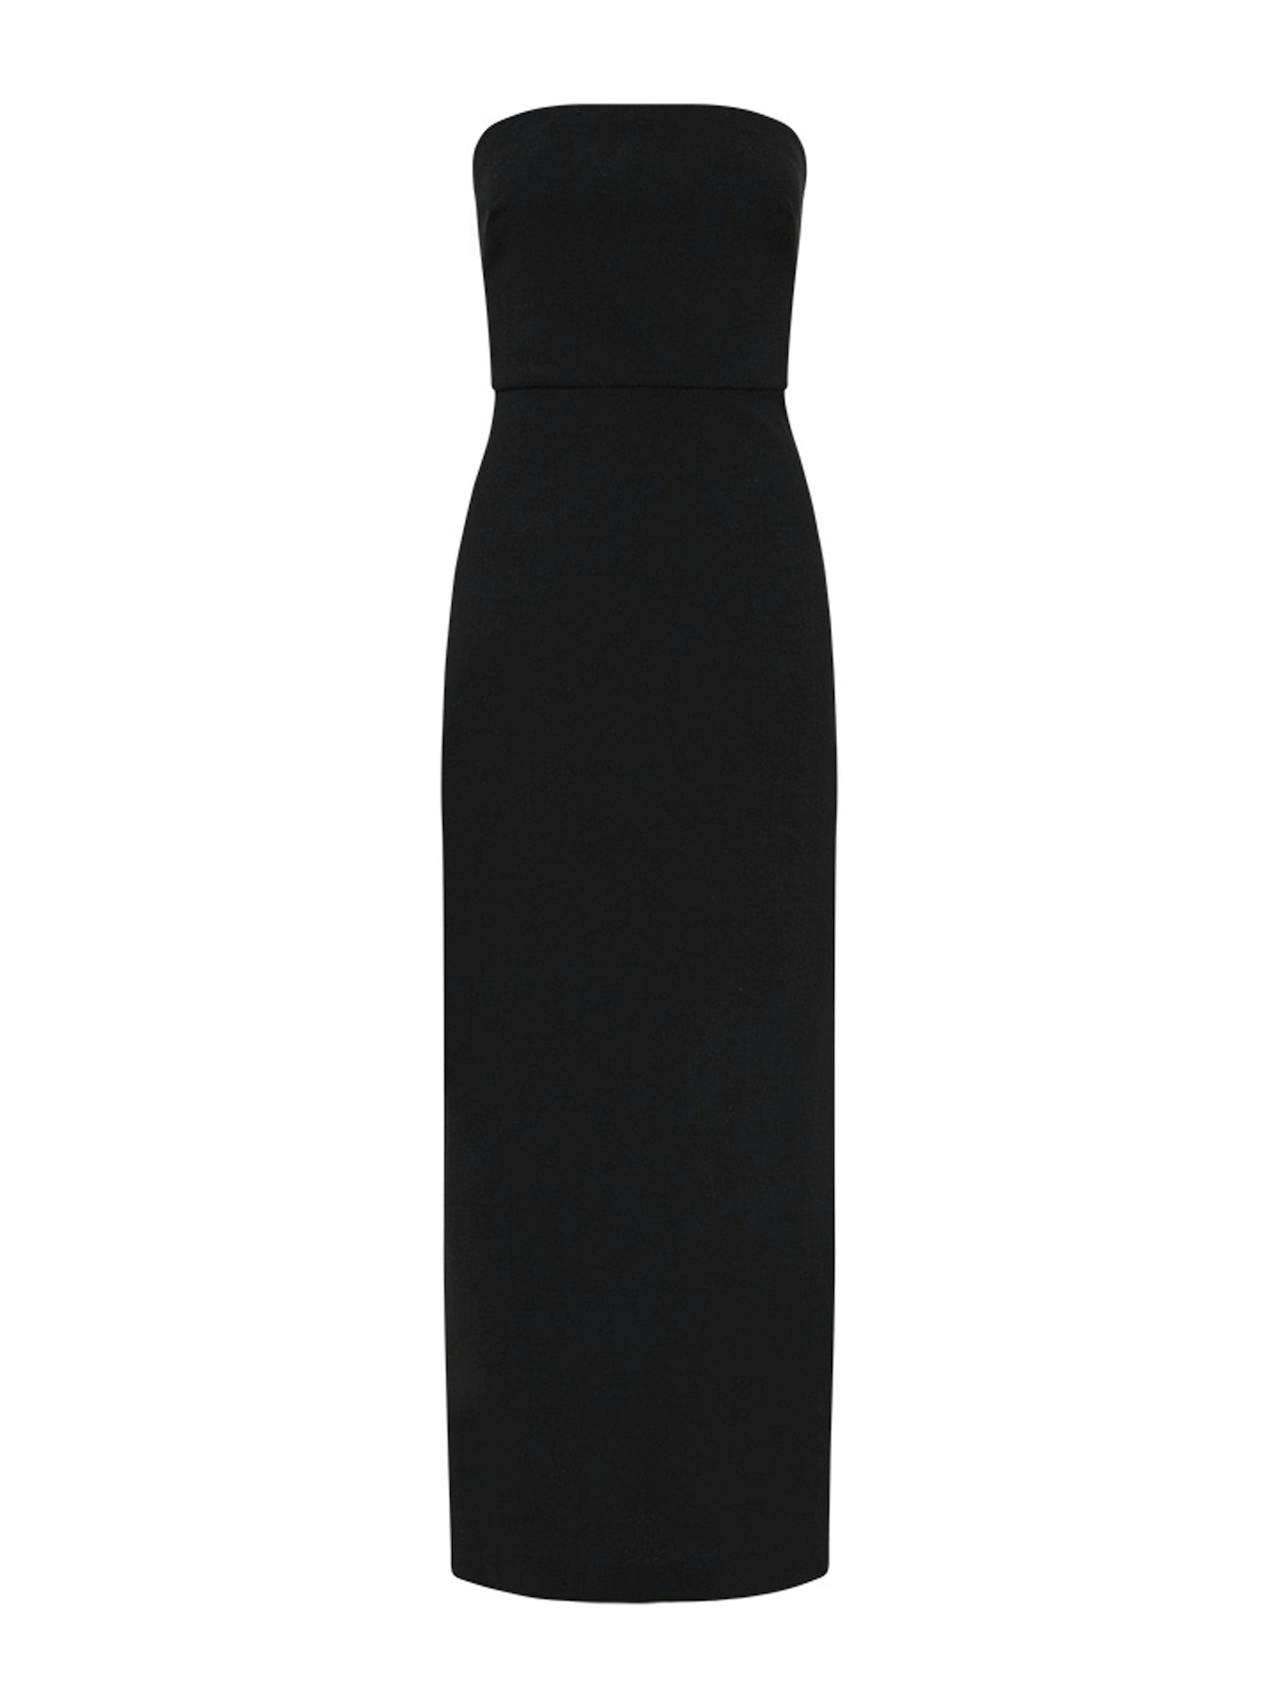 Black crepe strapless dress